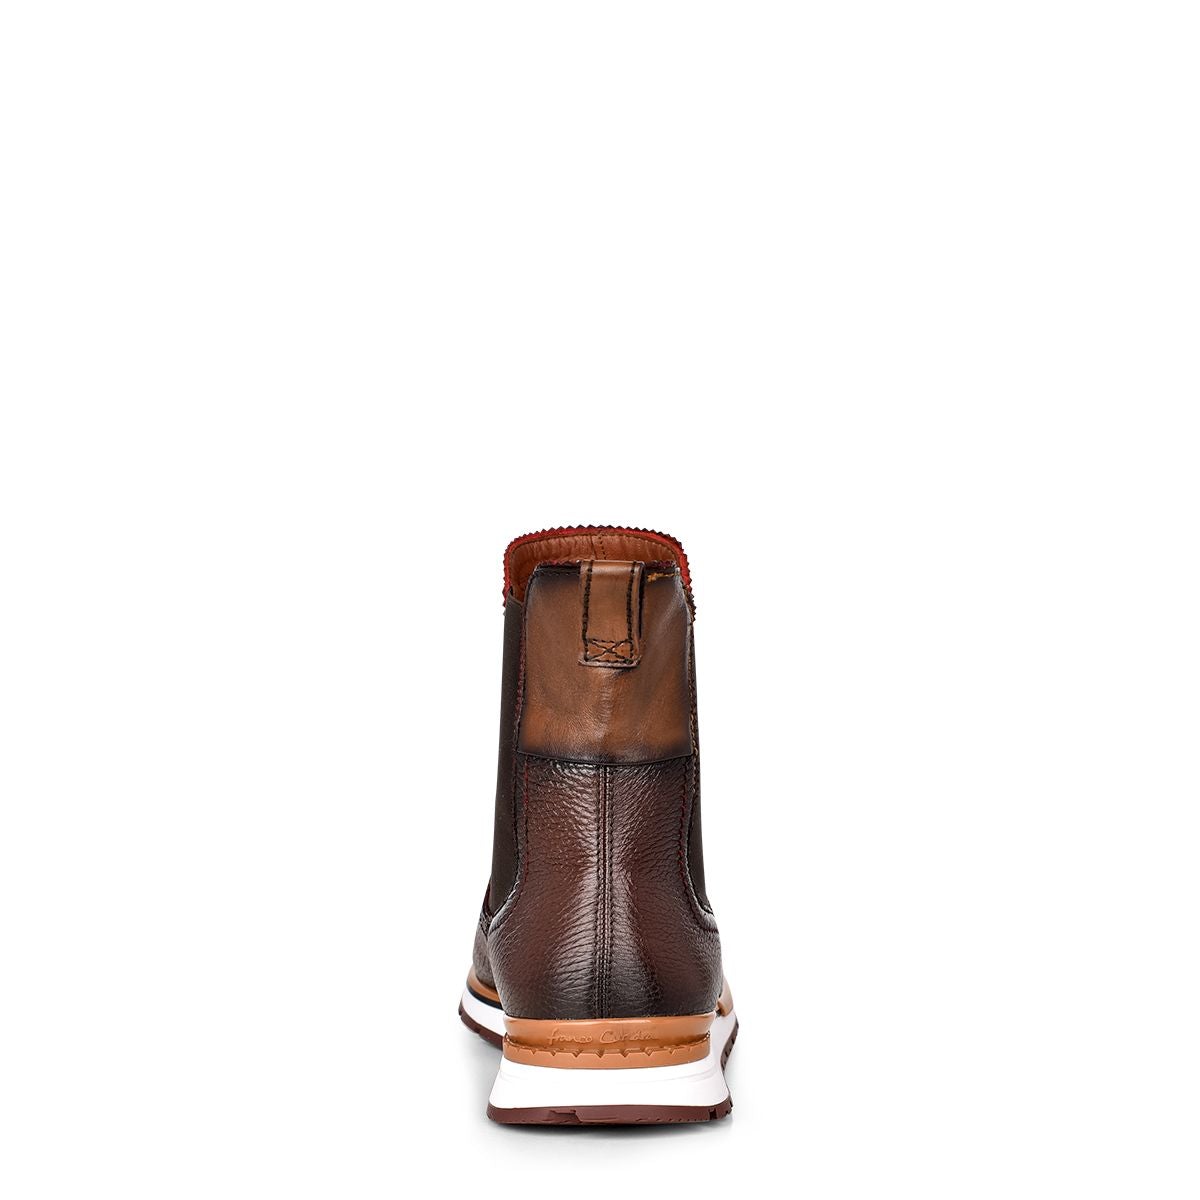 N50VNTS - Cuadra brown casual fashion deer leather sneaker boots for men-FRANCO CUADRA-Kuet-Cuadra-Boots